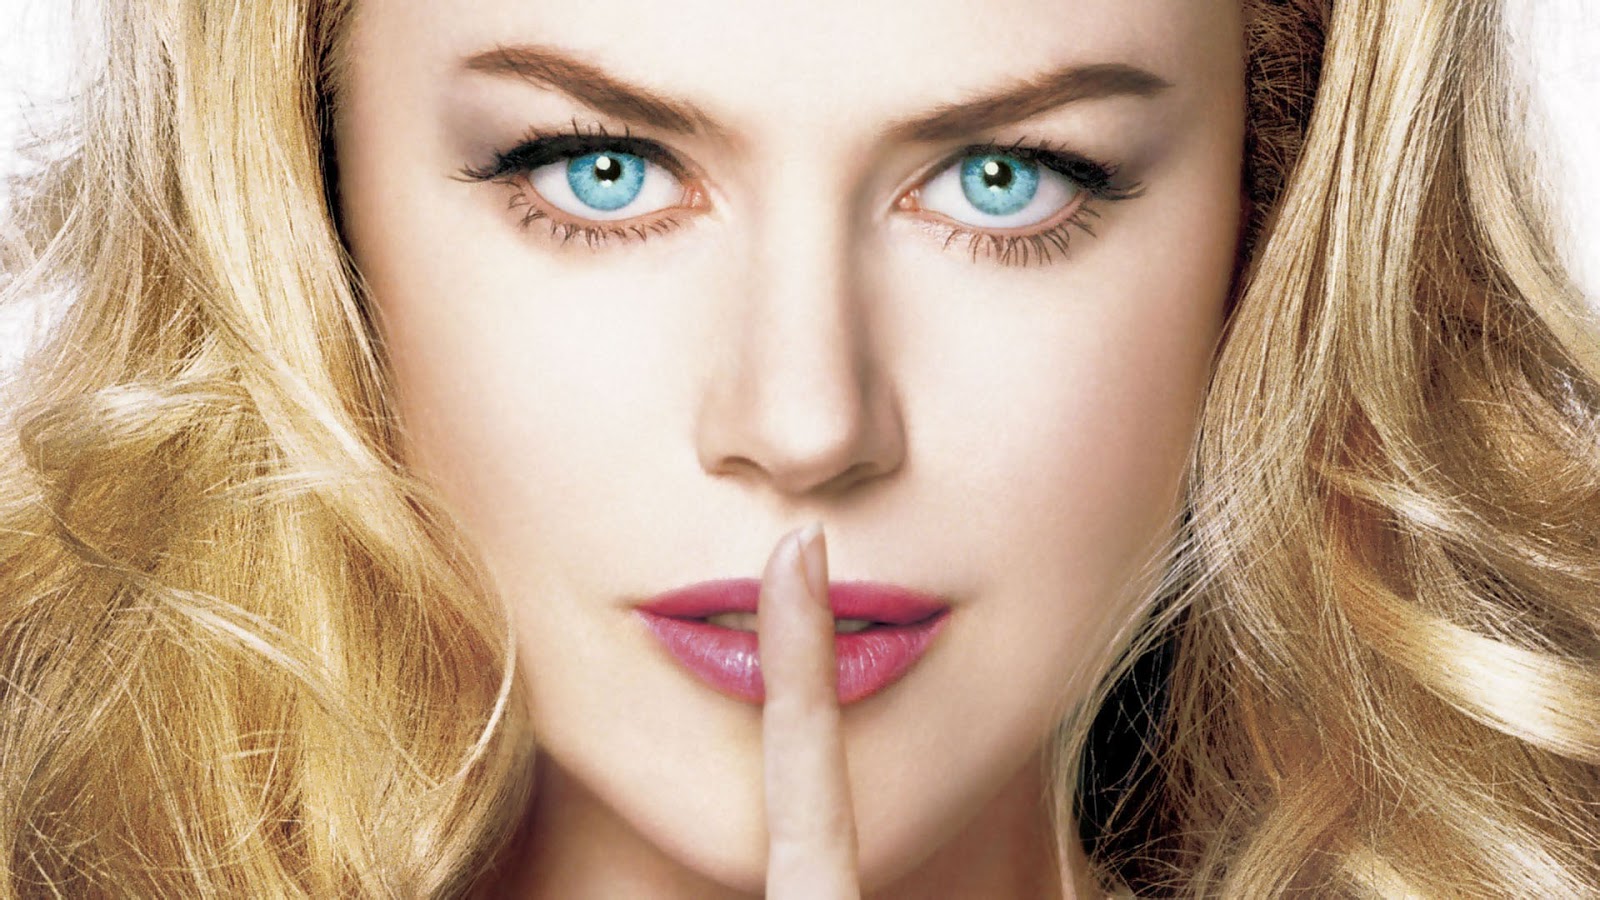 People 1600x900 Nicole Kidman face blonde red lipstick Australian actress finger on lips women blue eyes silence